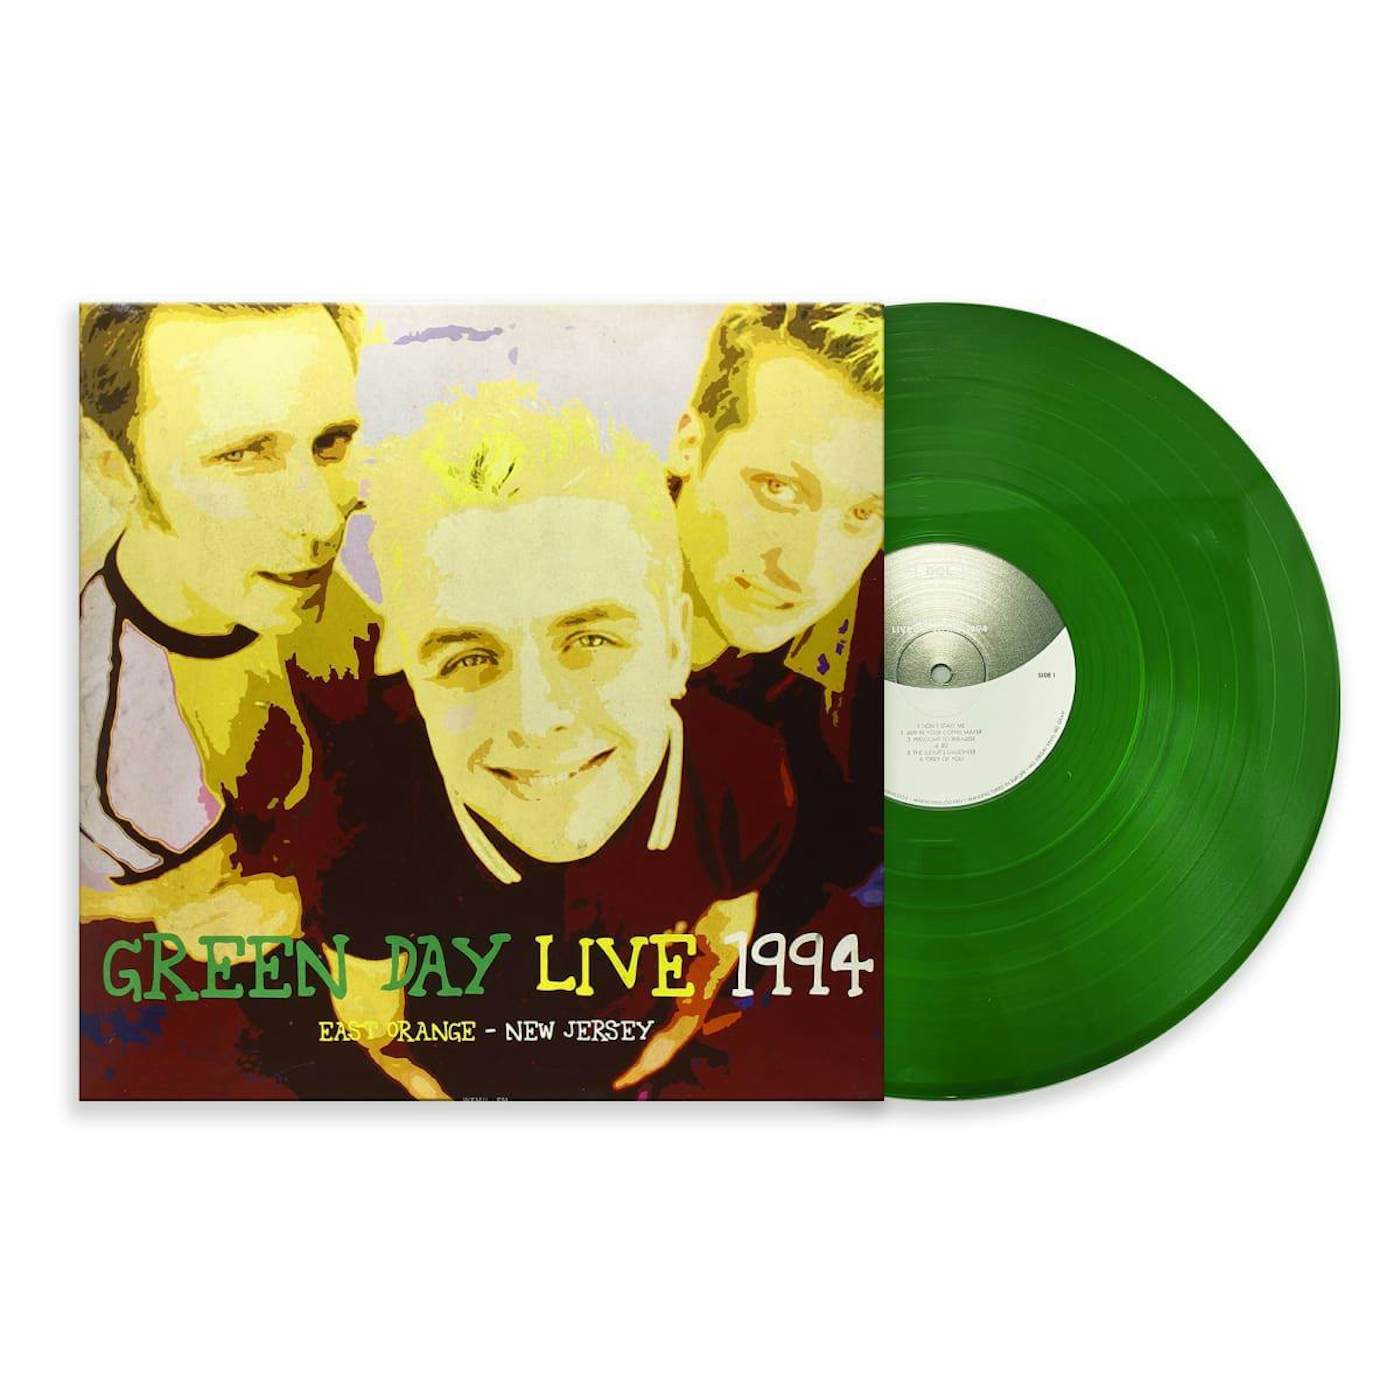 Green Day LP Vinyl Record - Live At WFMU-FM East Orange New Jersey August 1st 1994 (Green Vinyl)